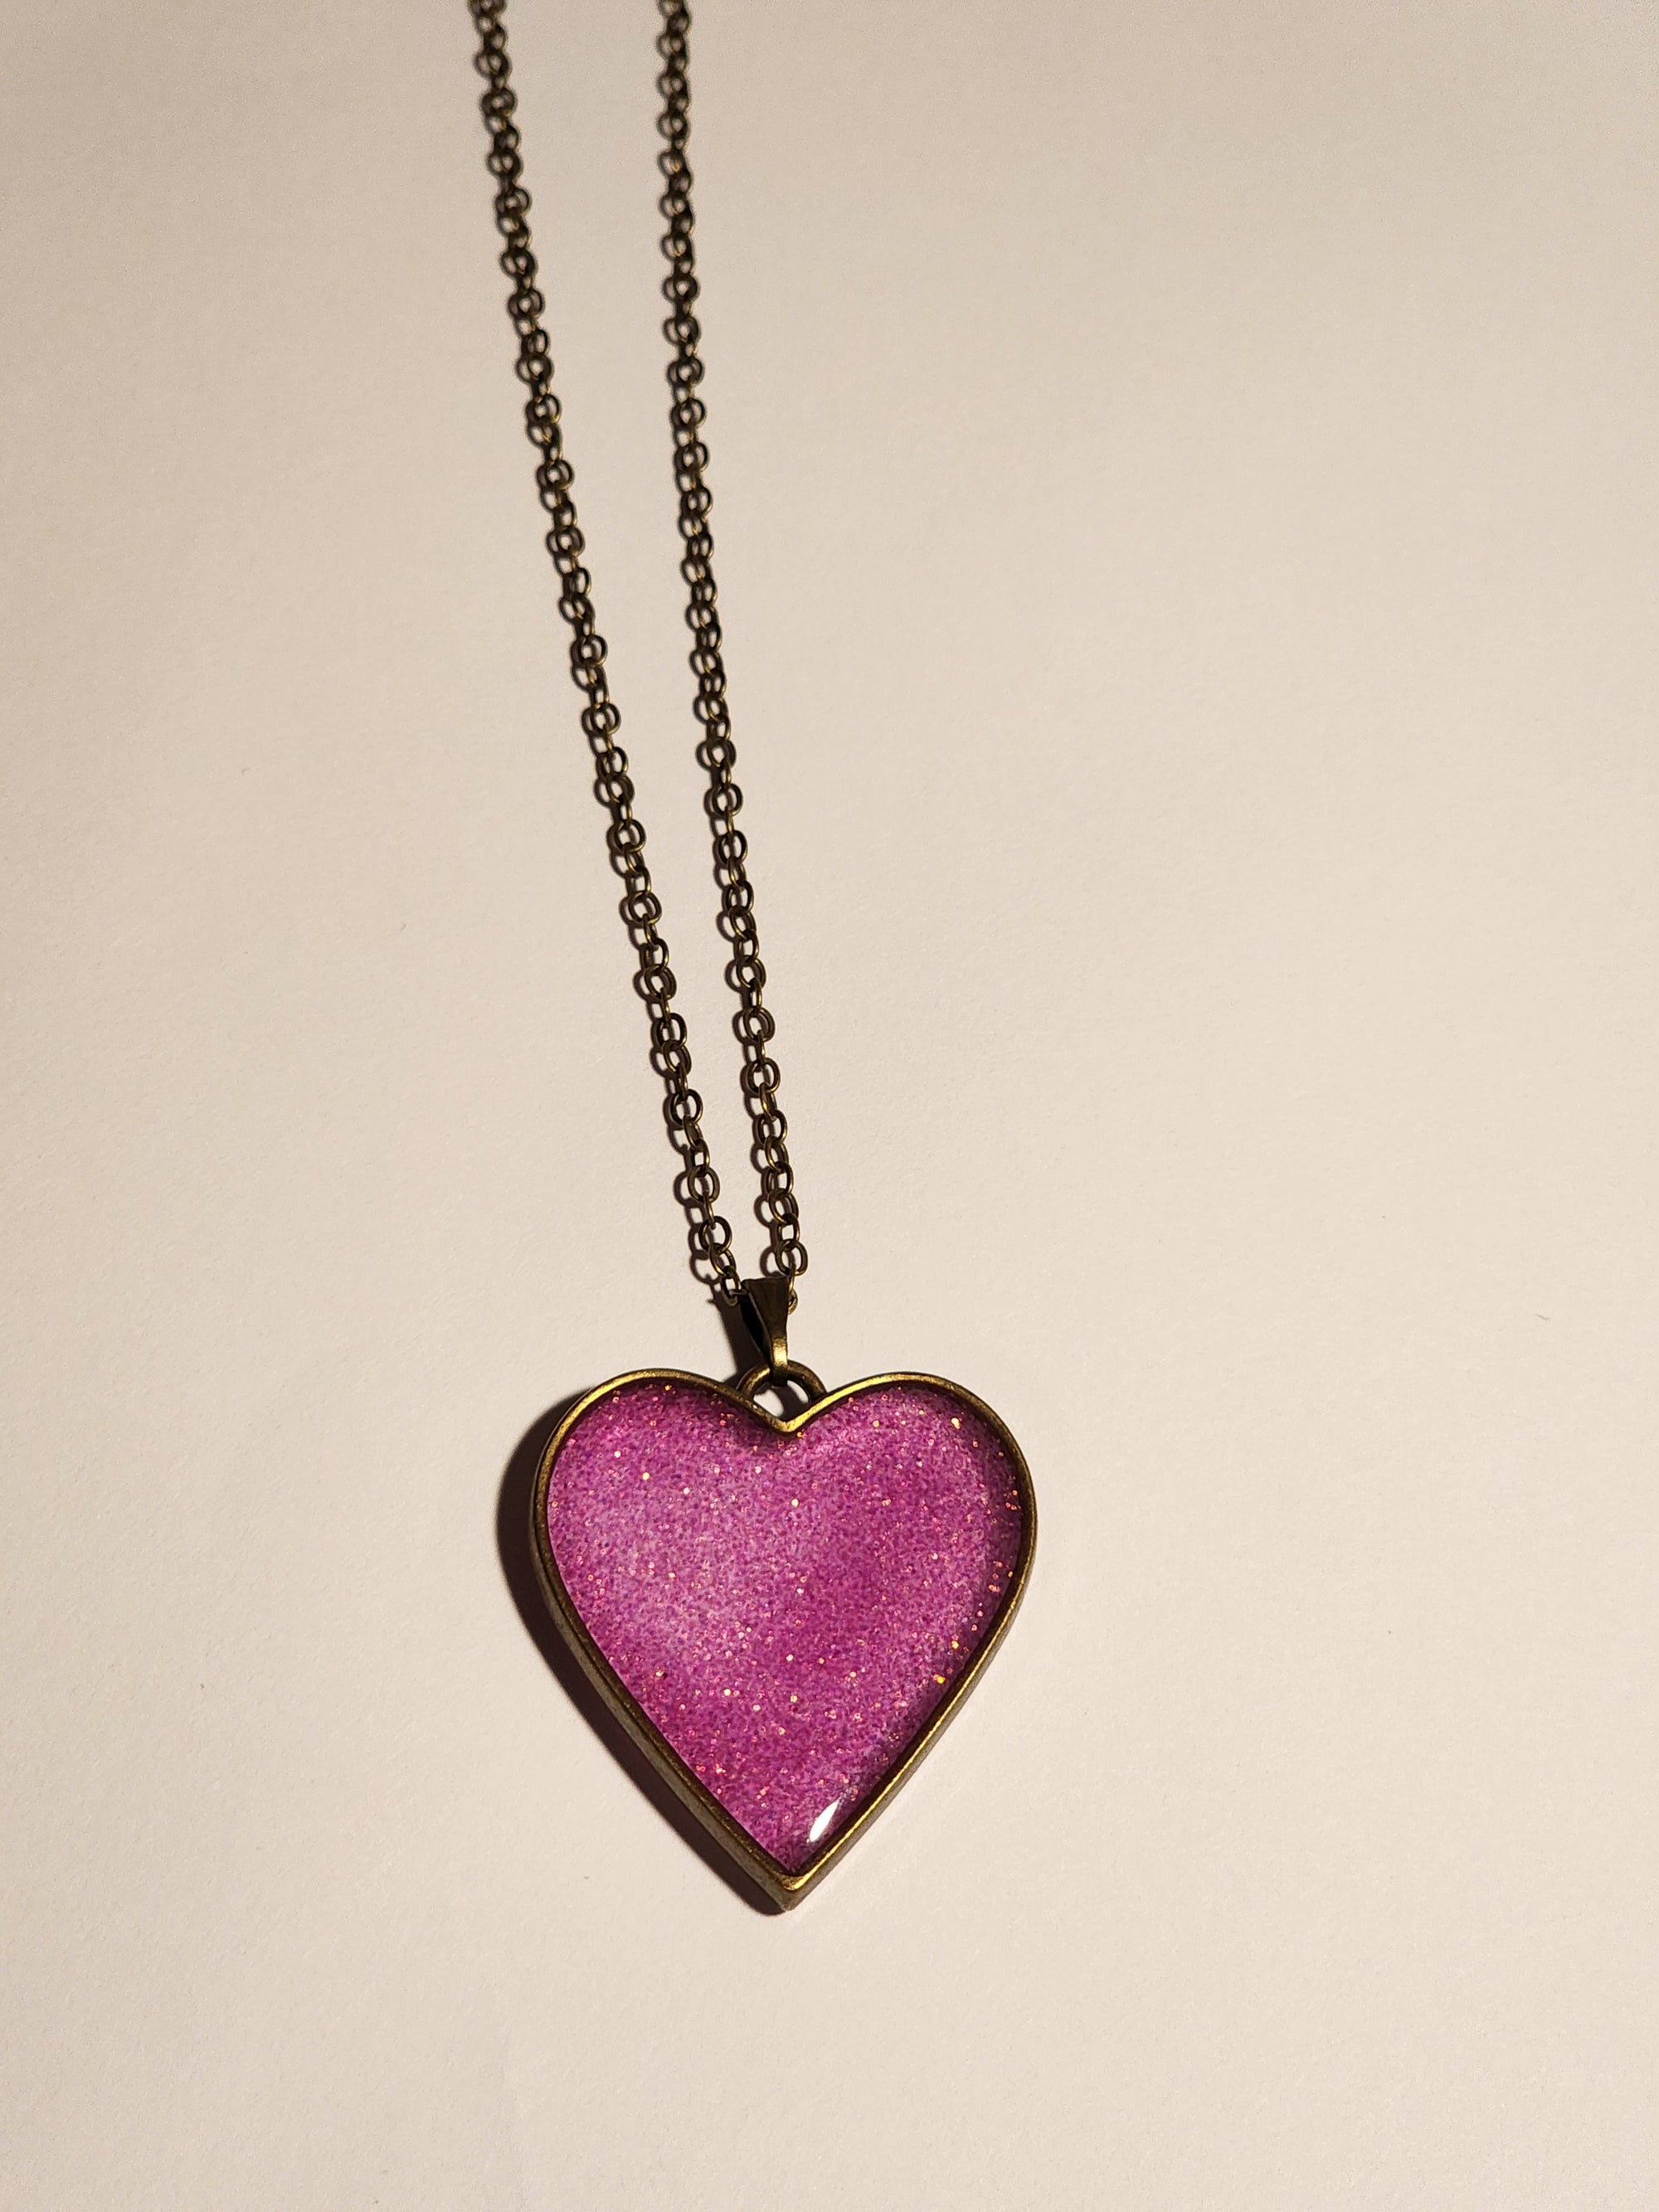 Light purple heart pendant